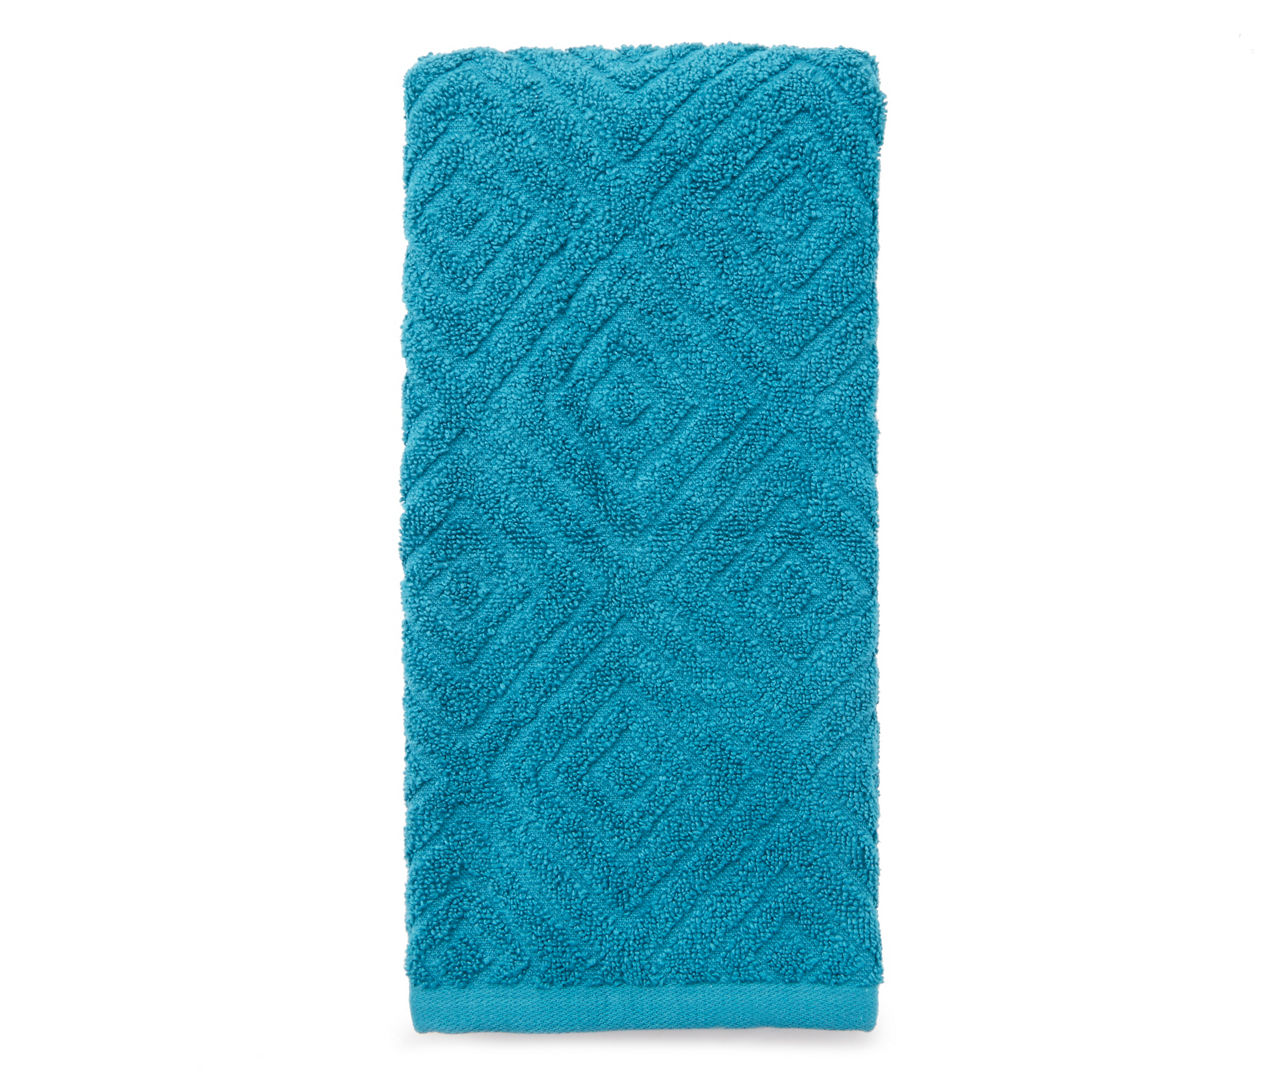 Teal Diamond Hand Towel